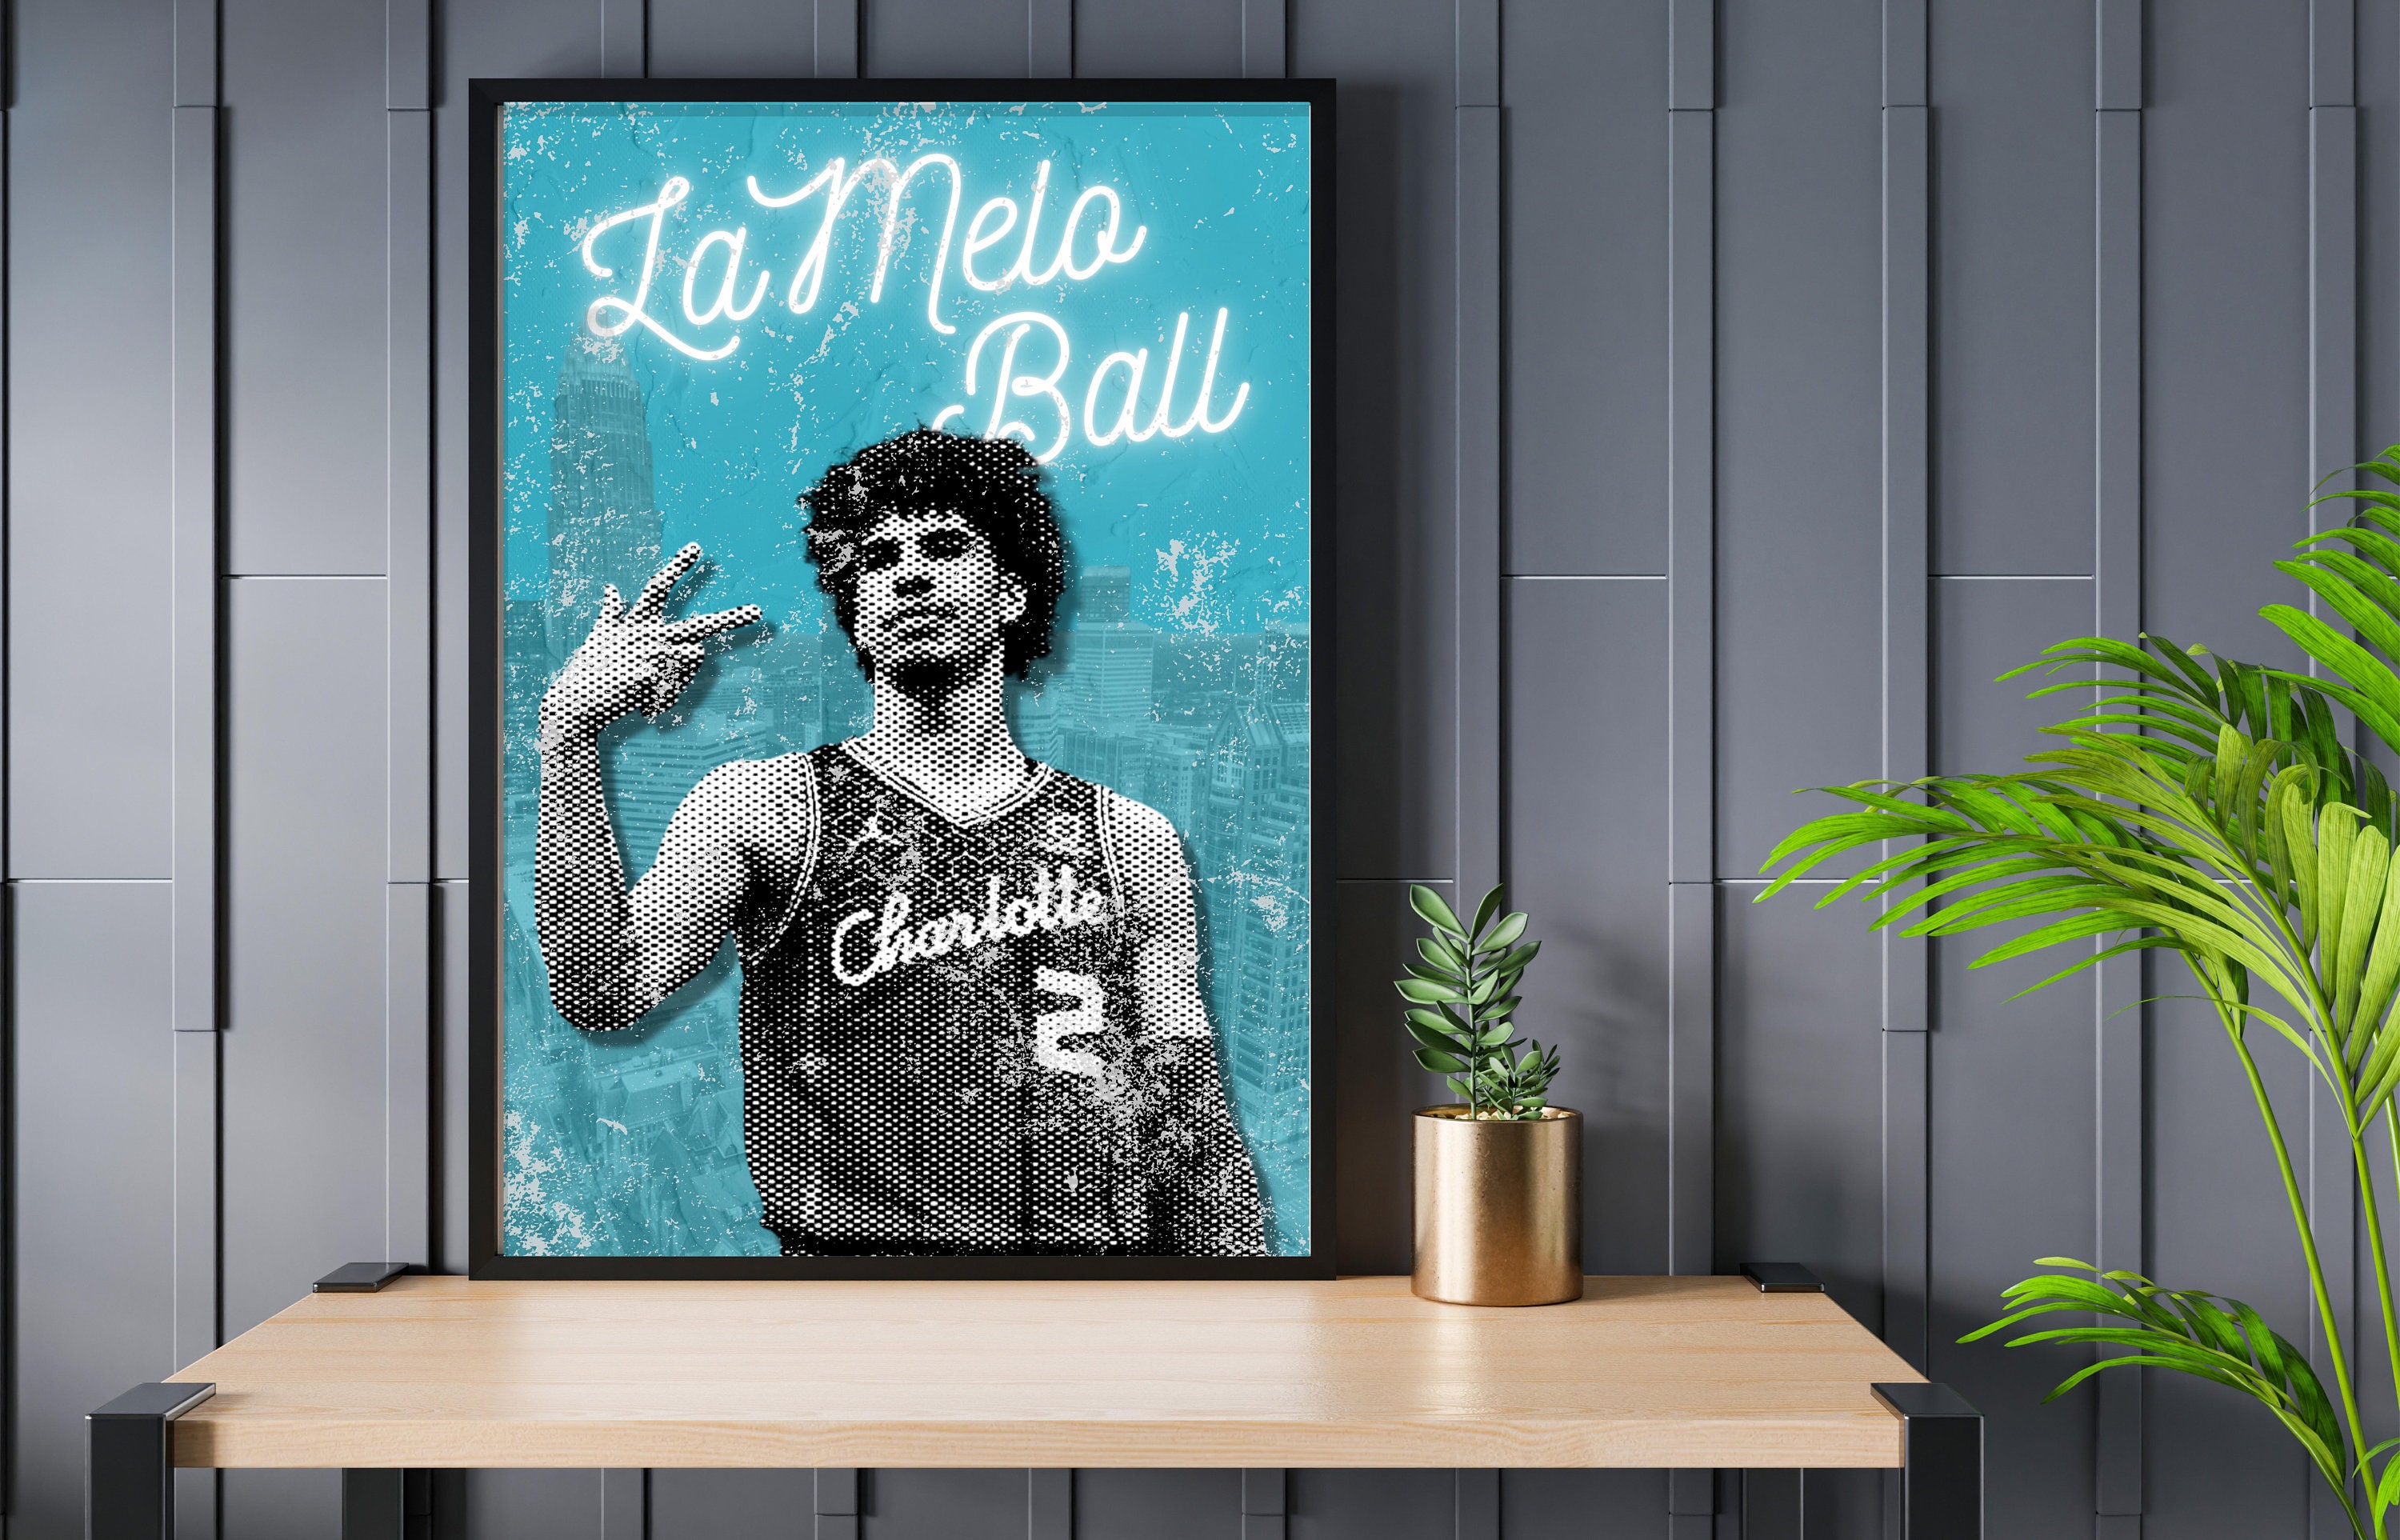 LaMelo Ball Poster Charlotte Hornets Street NBA Decoration Basketball Prints for Kids